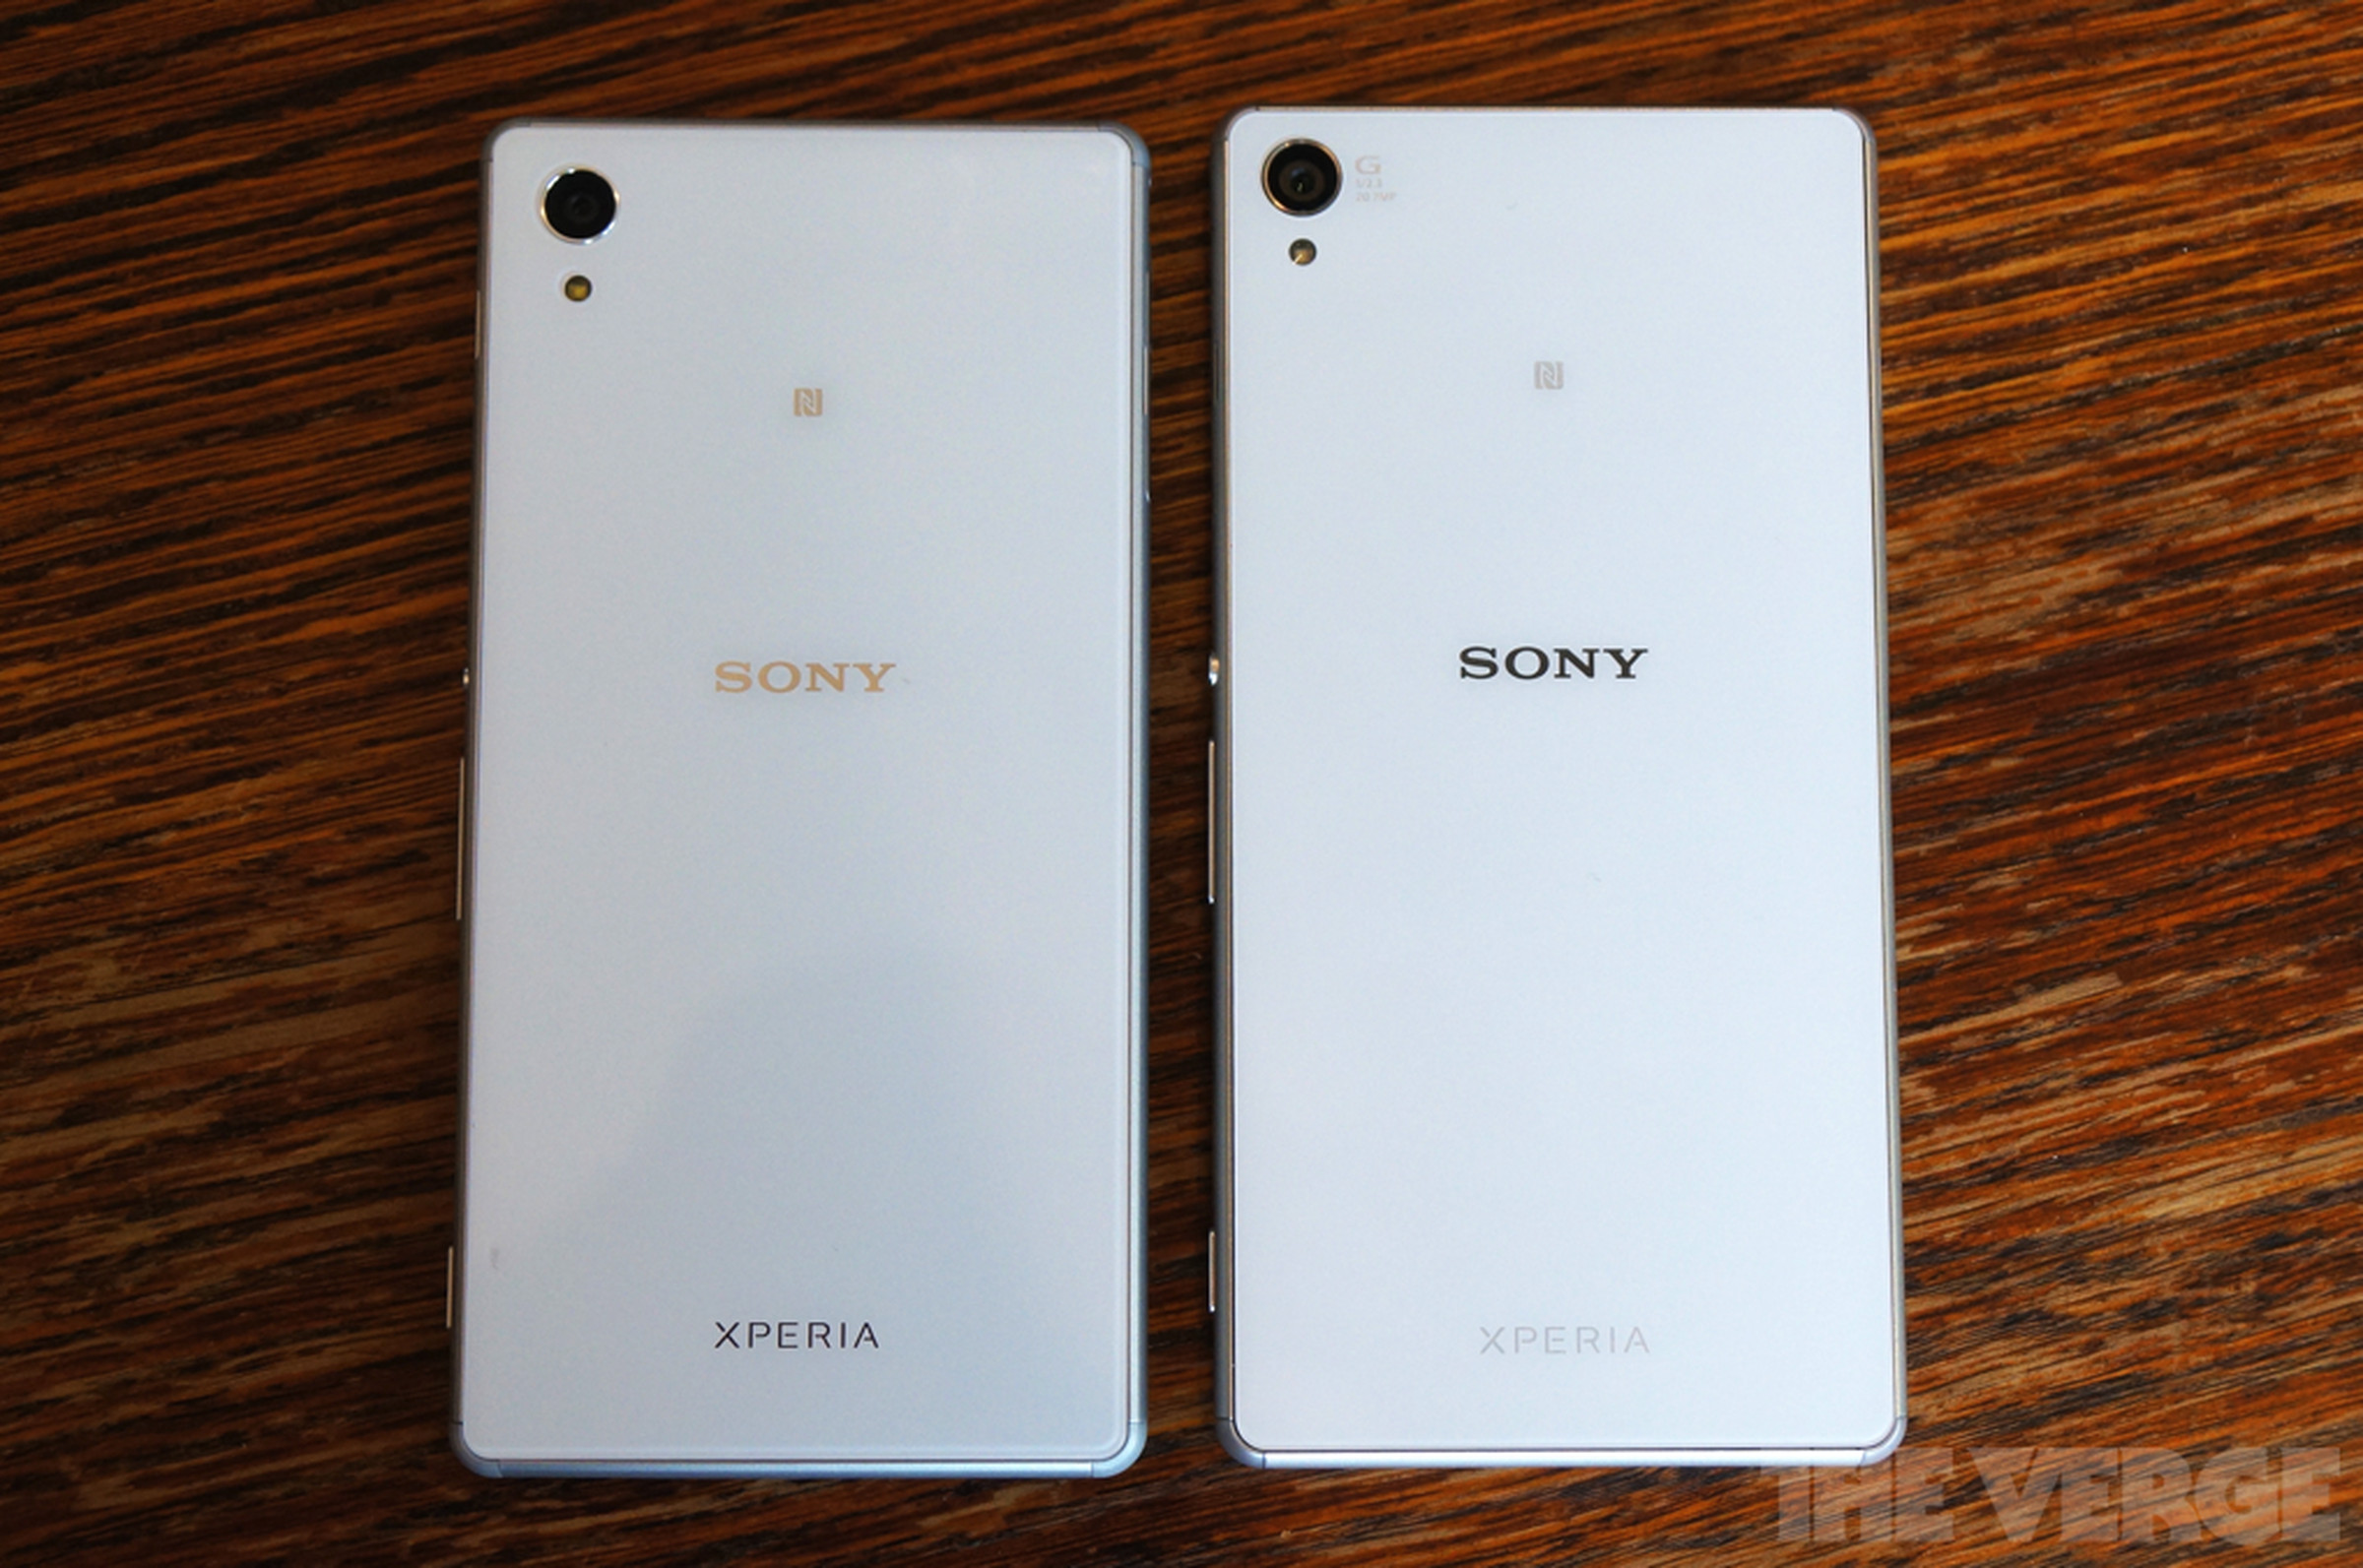 Sony Xperia M4 Aqua hands-on photos